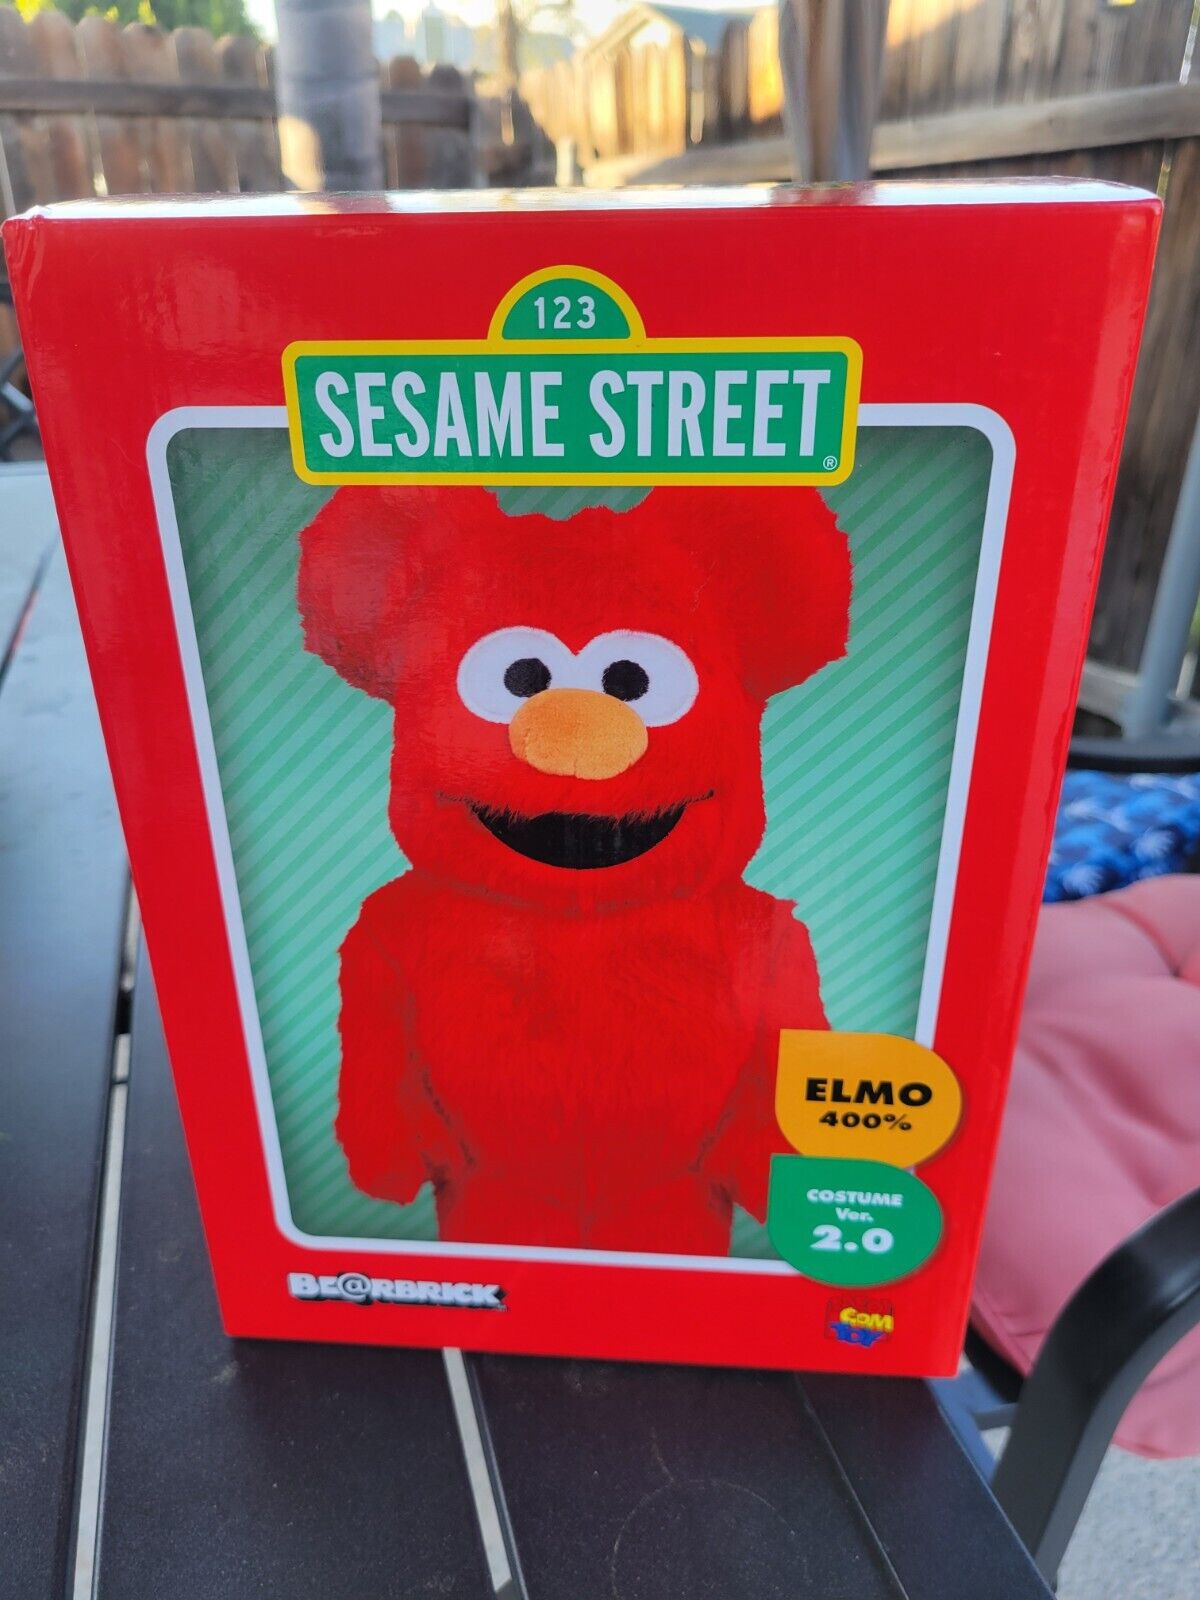 Medicom Toy Be@rbrick Sesame Street Elmo 400% Bearbrick NEW